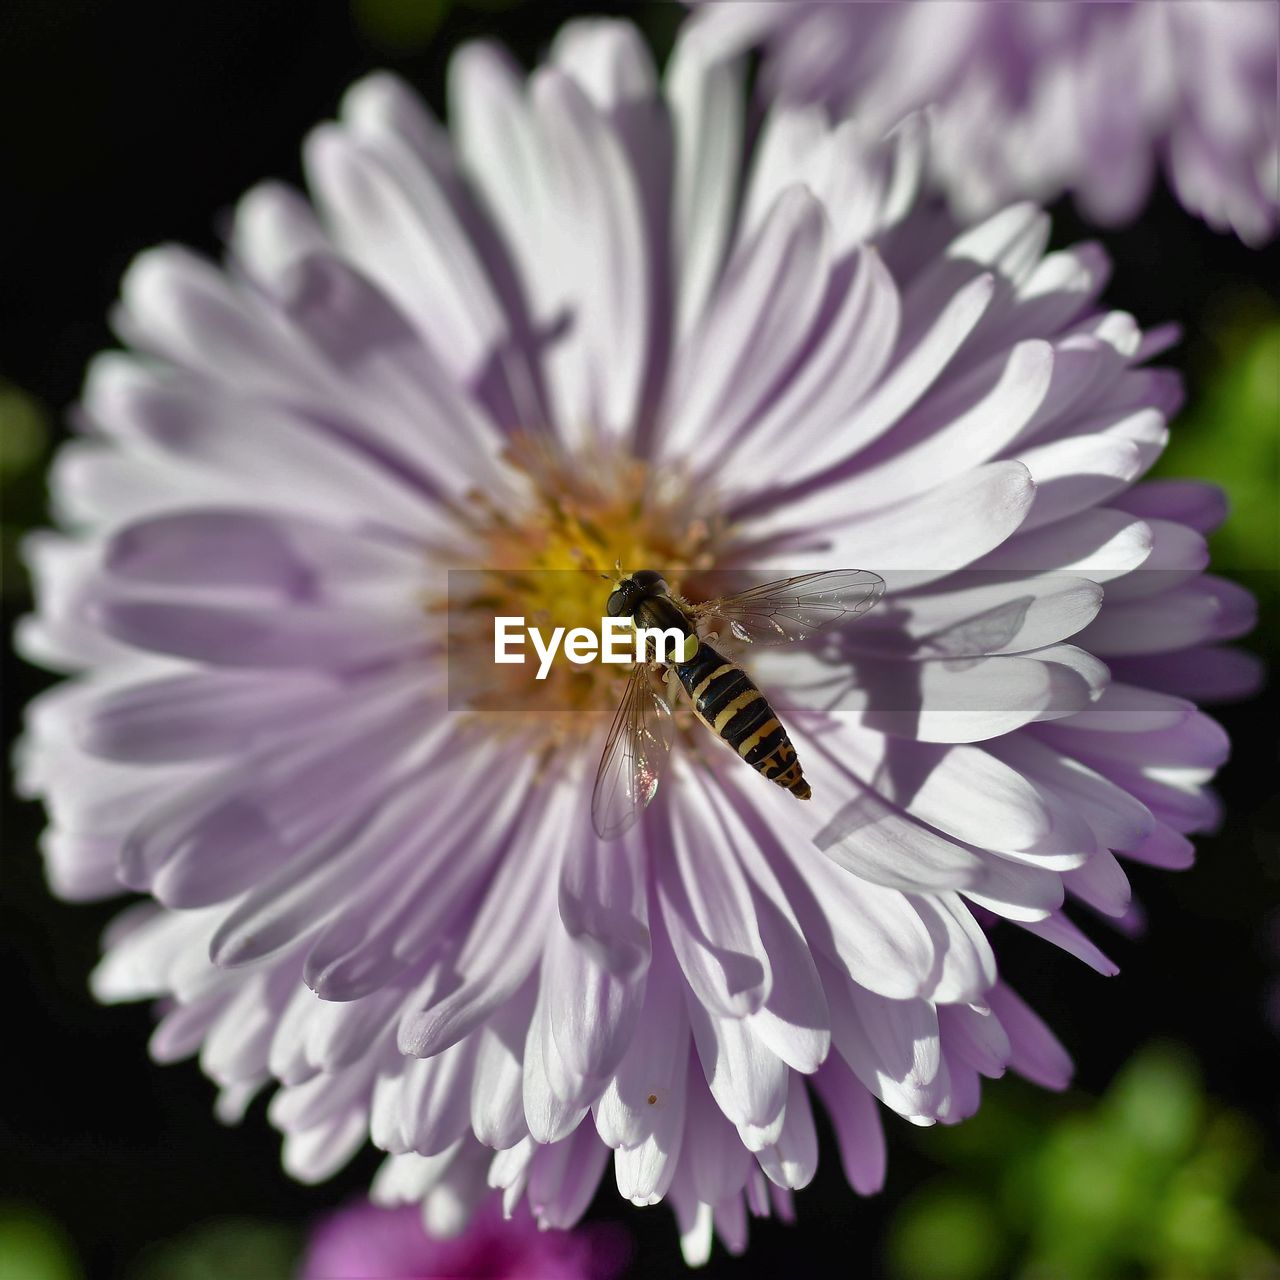 CLOSE-UP OF BEE ON PURPLE FLOWER